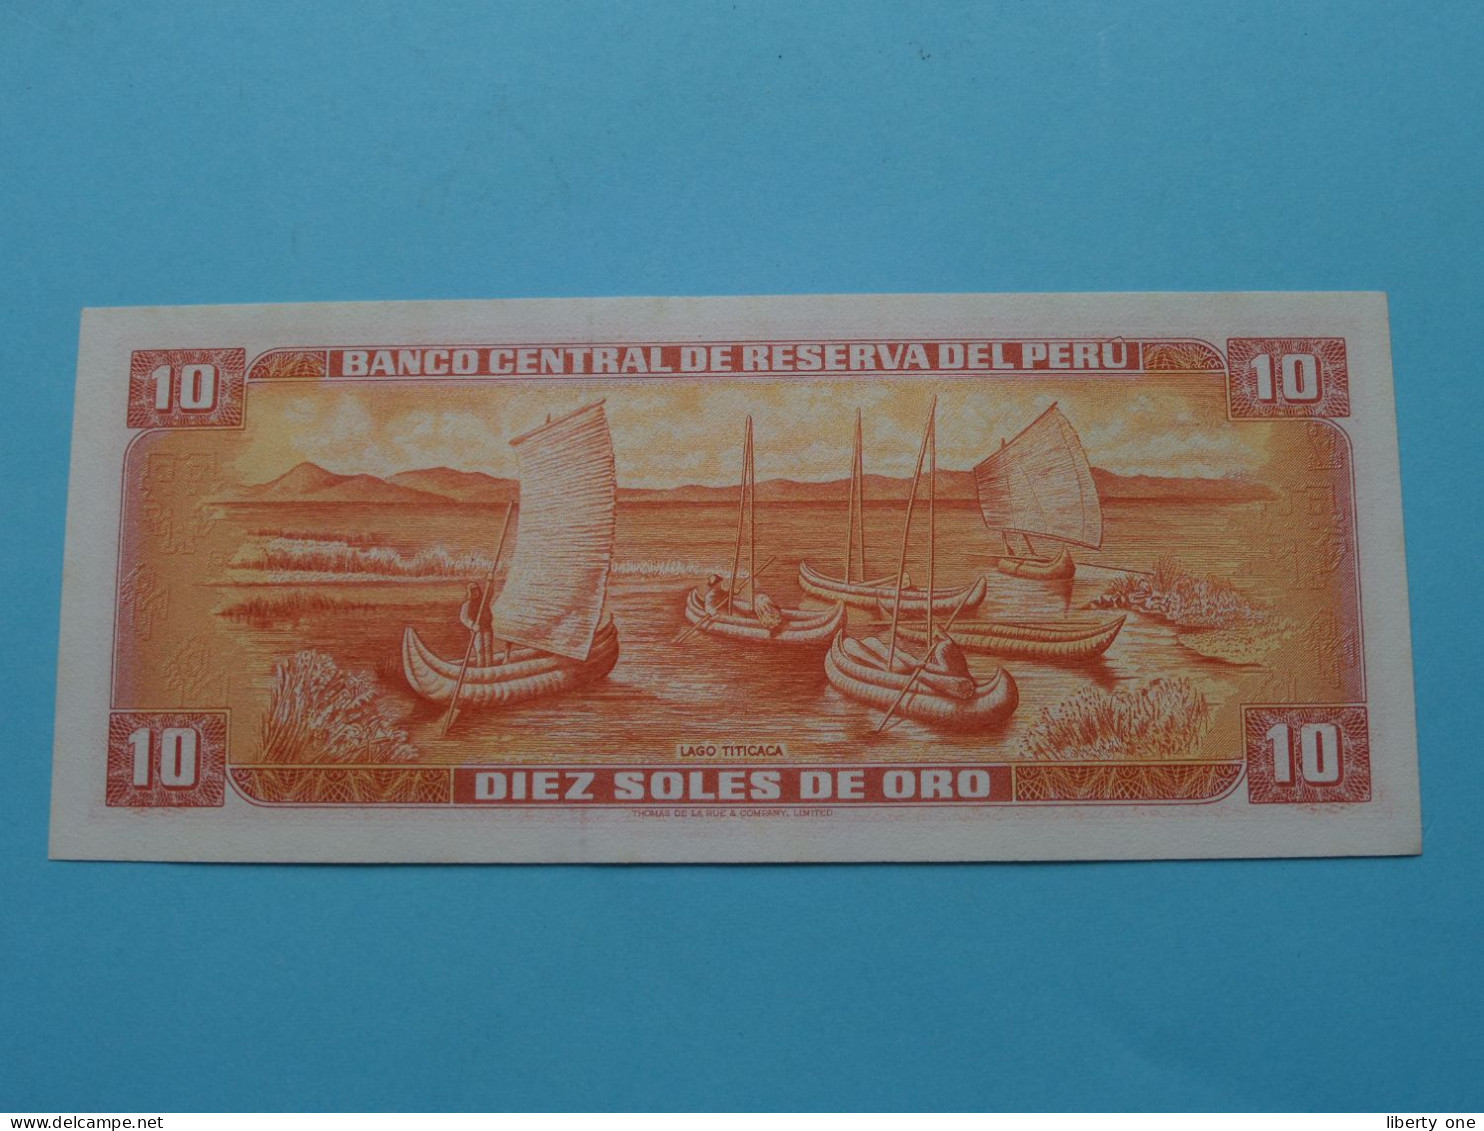 10 Diez Soles De Oro () Banco Central PERU - 1976 ( For Grade See SCANS ) UNC ! - Peru